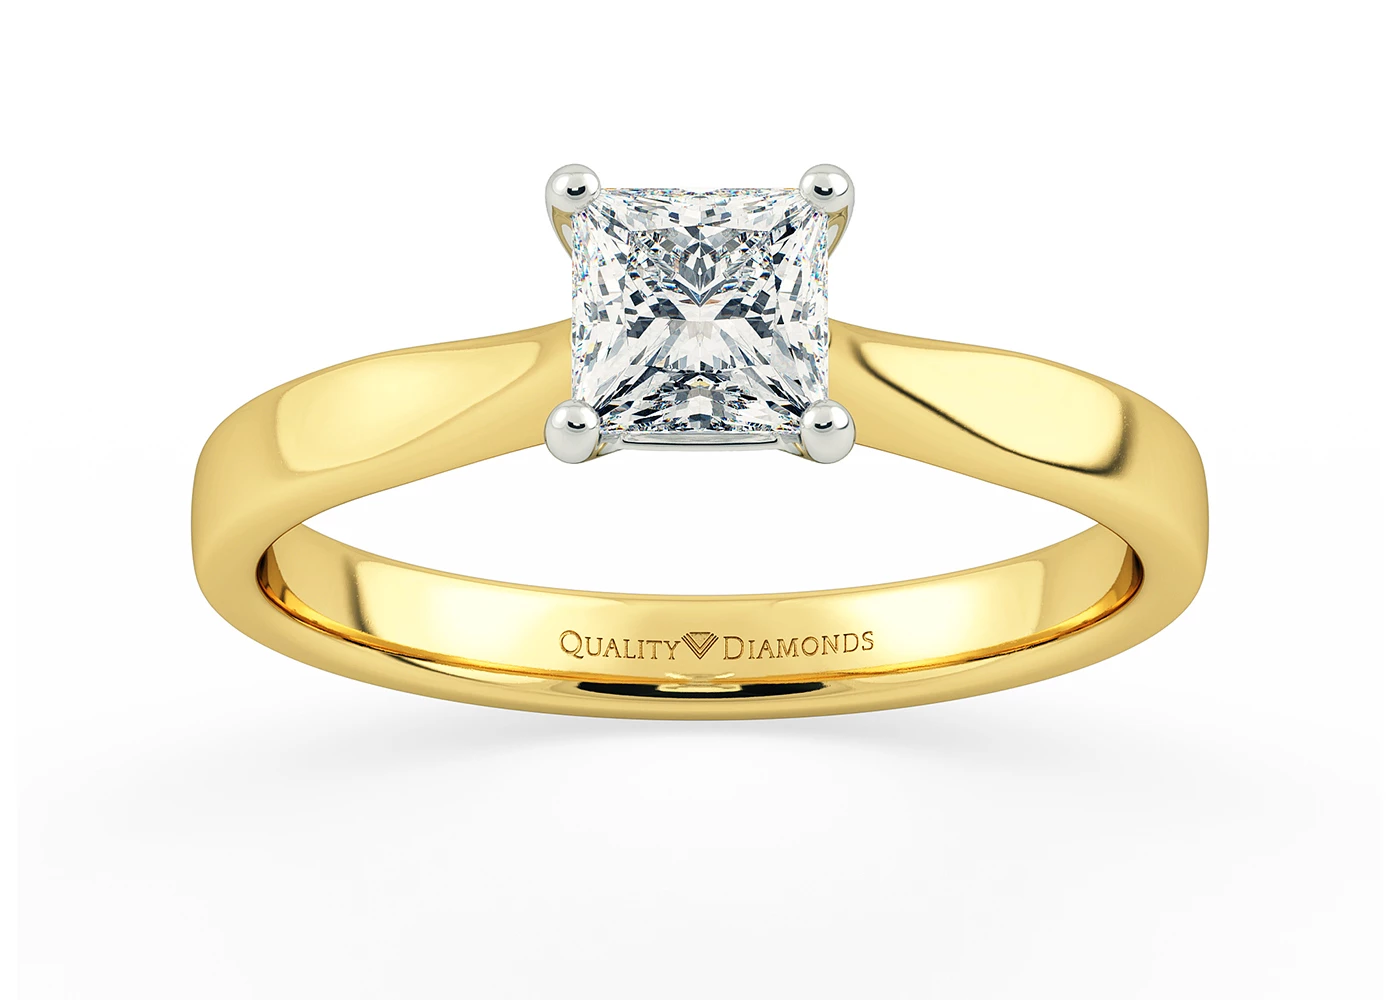 Princess Beau Diamond Ring in 9K Yellow Gold